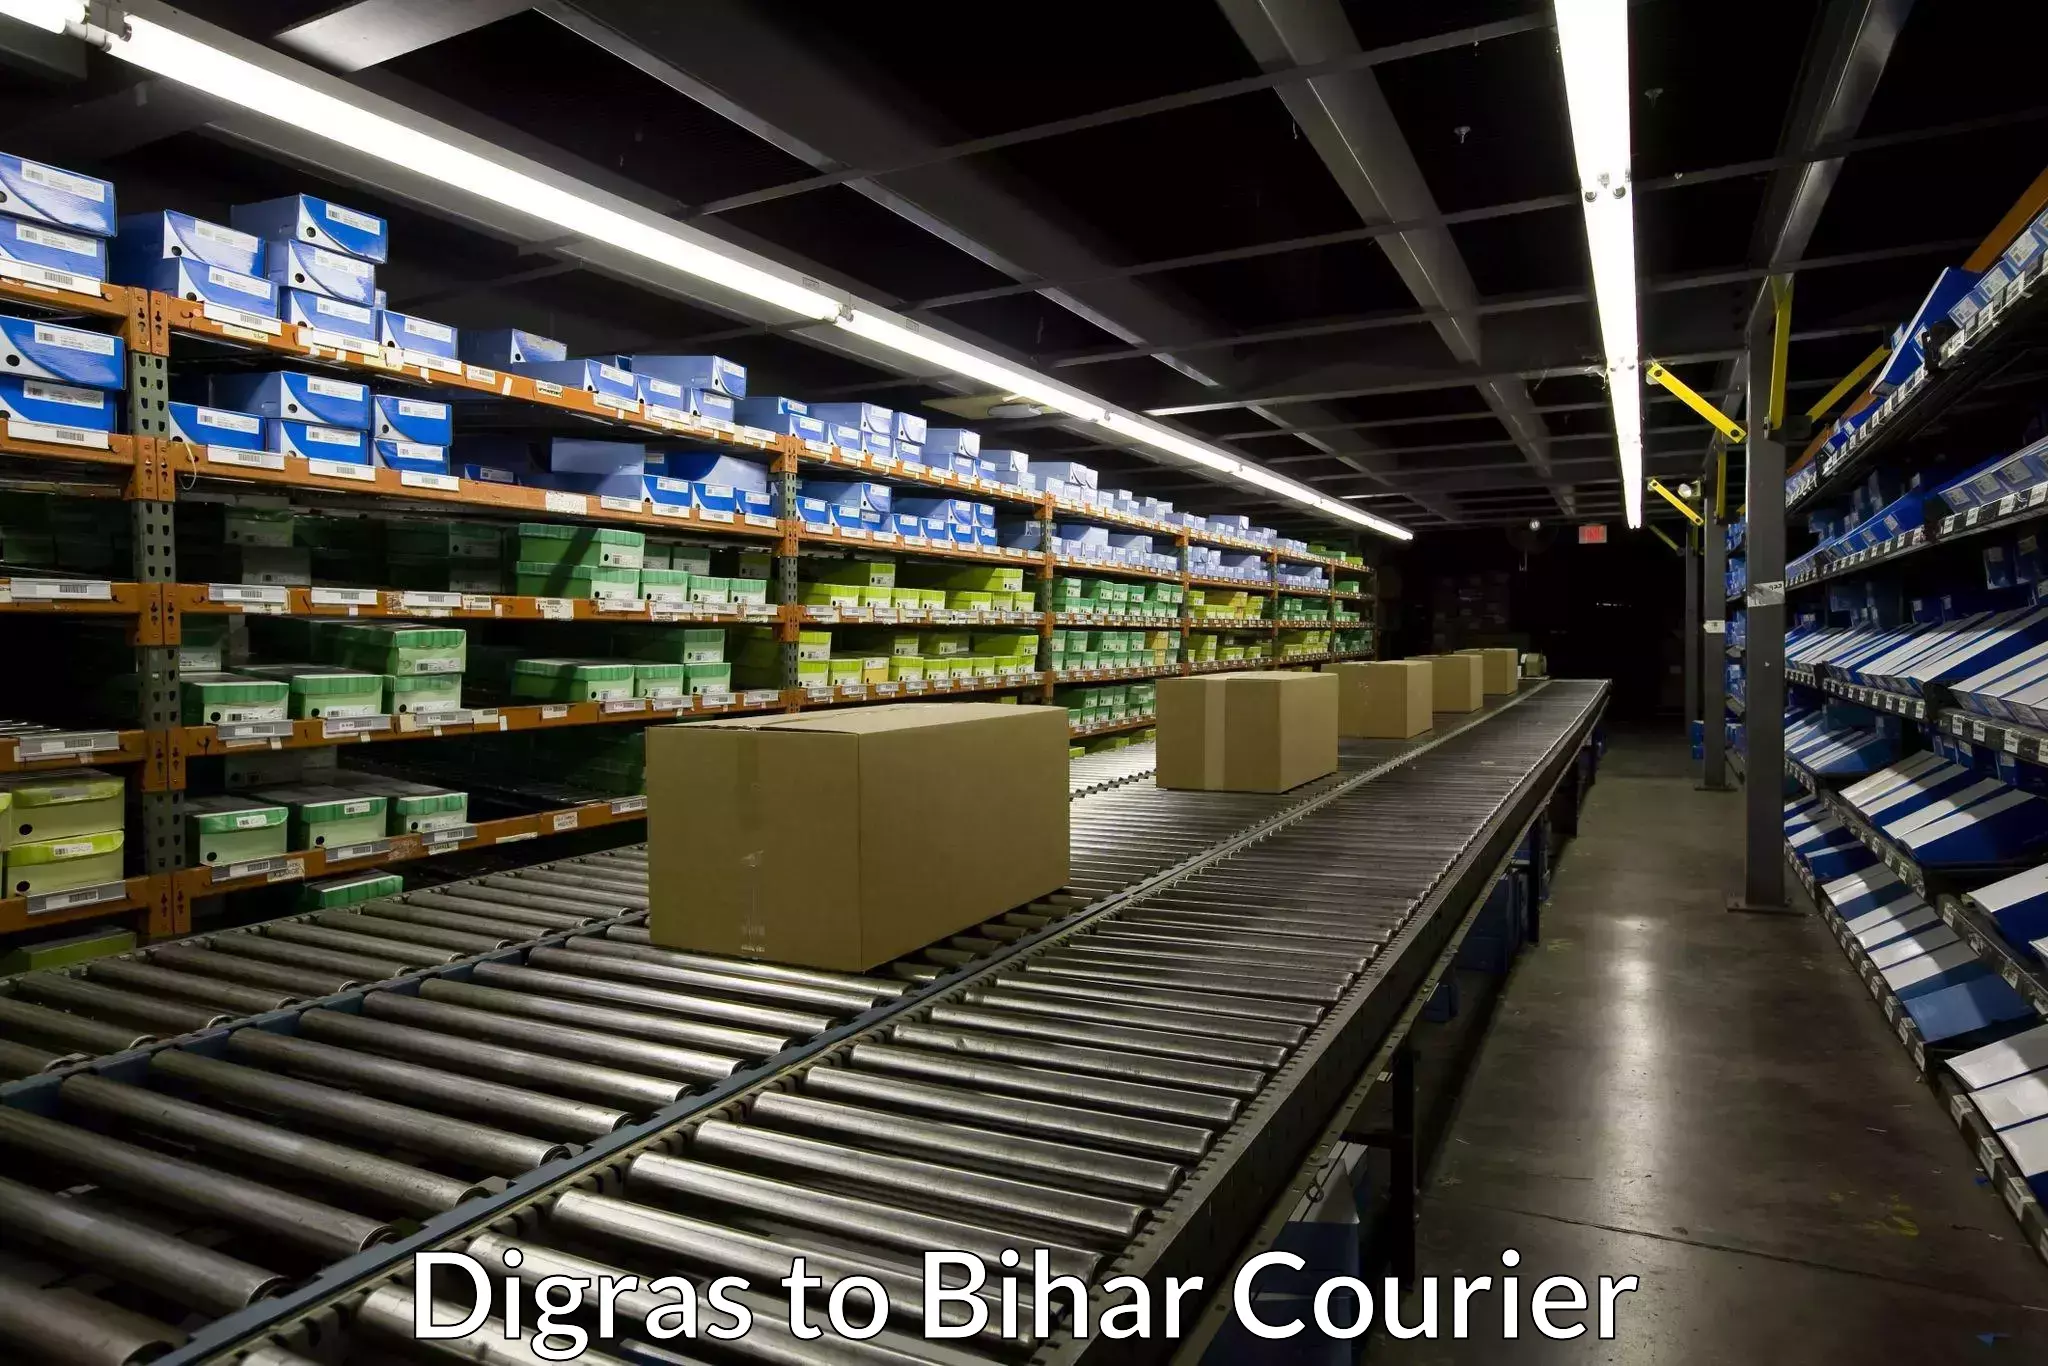 Express delivery capabilities Digras to Bihar